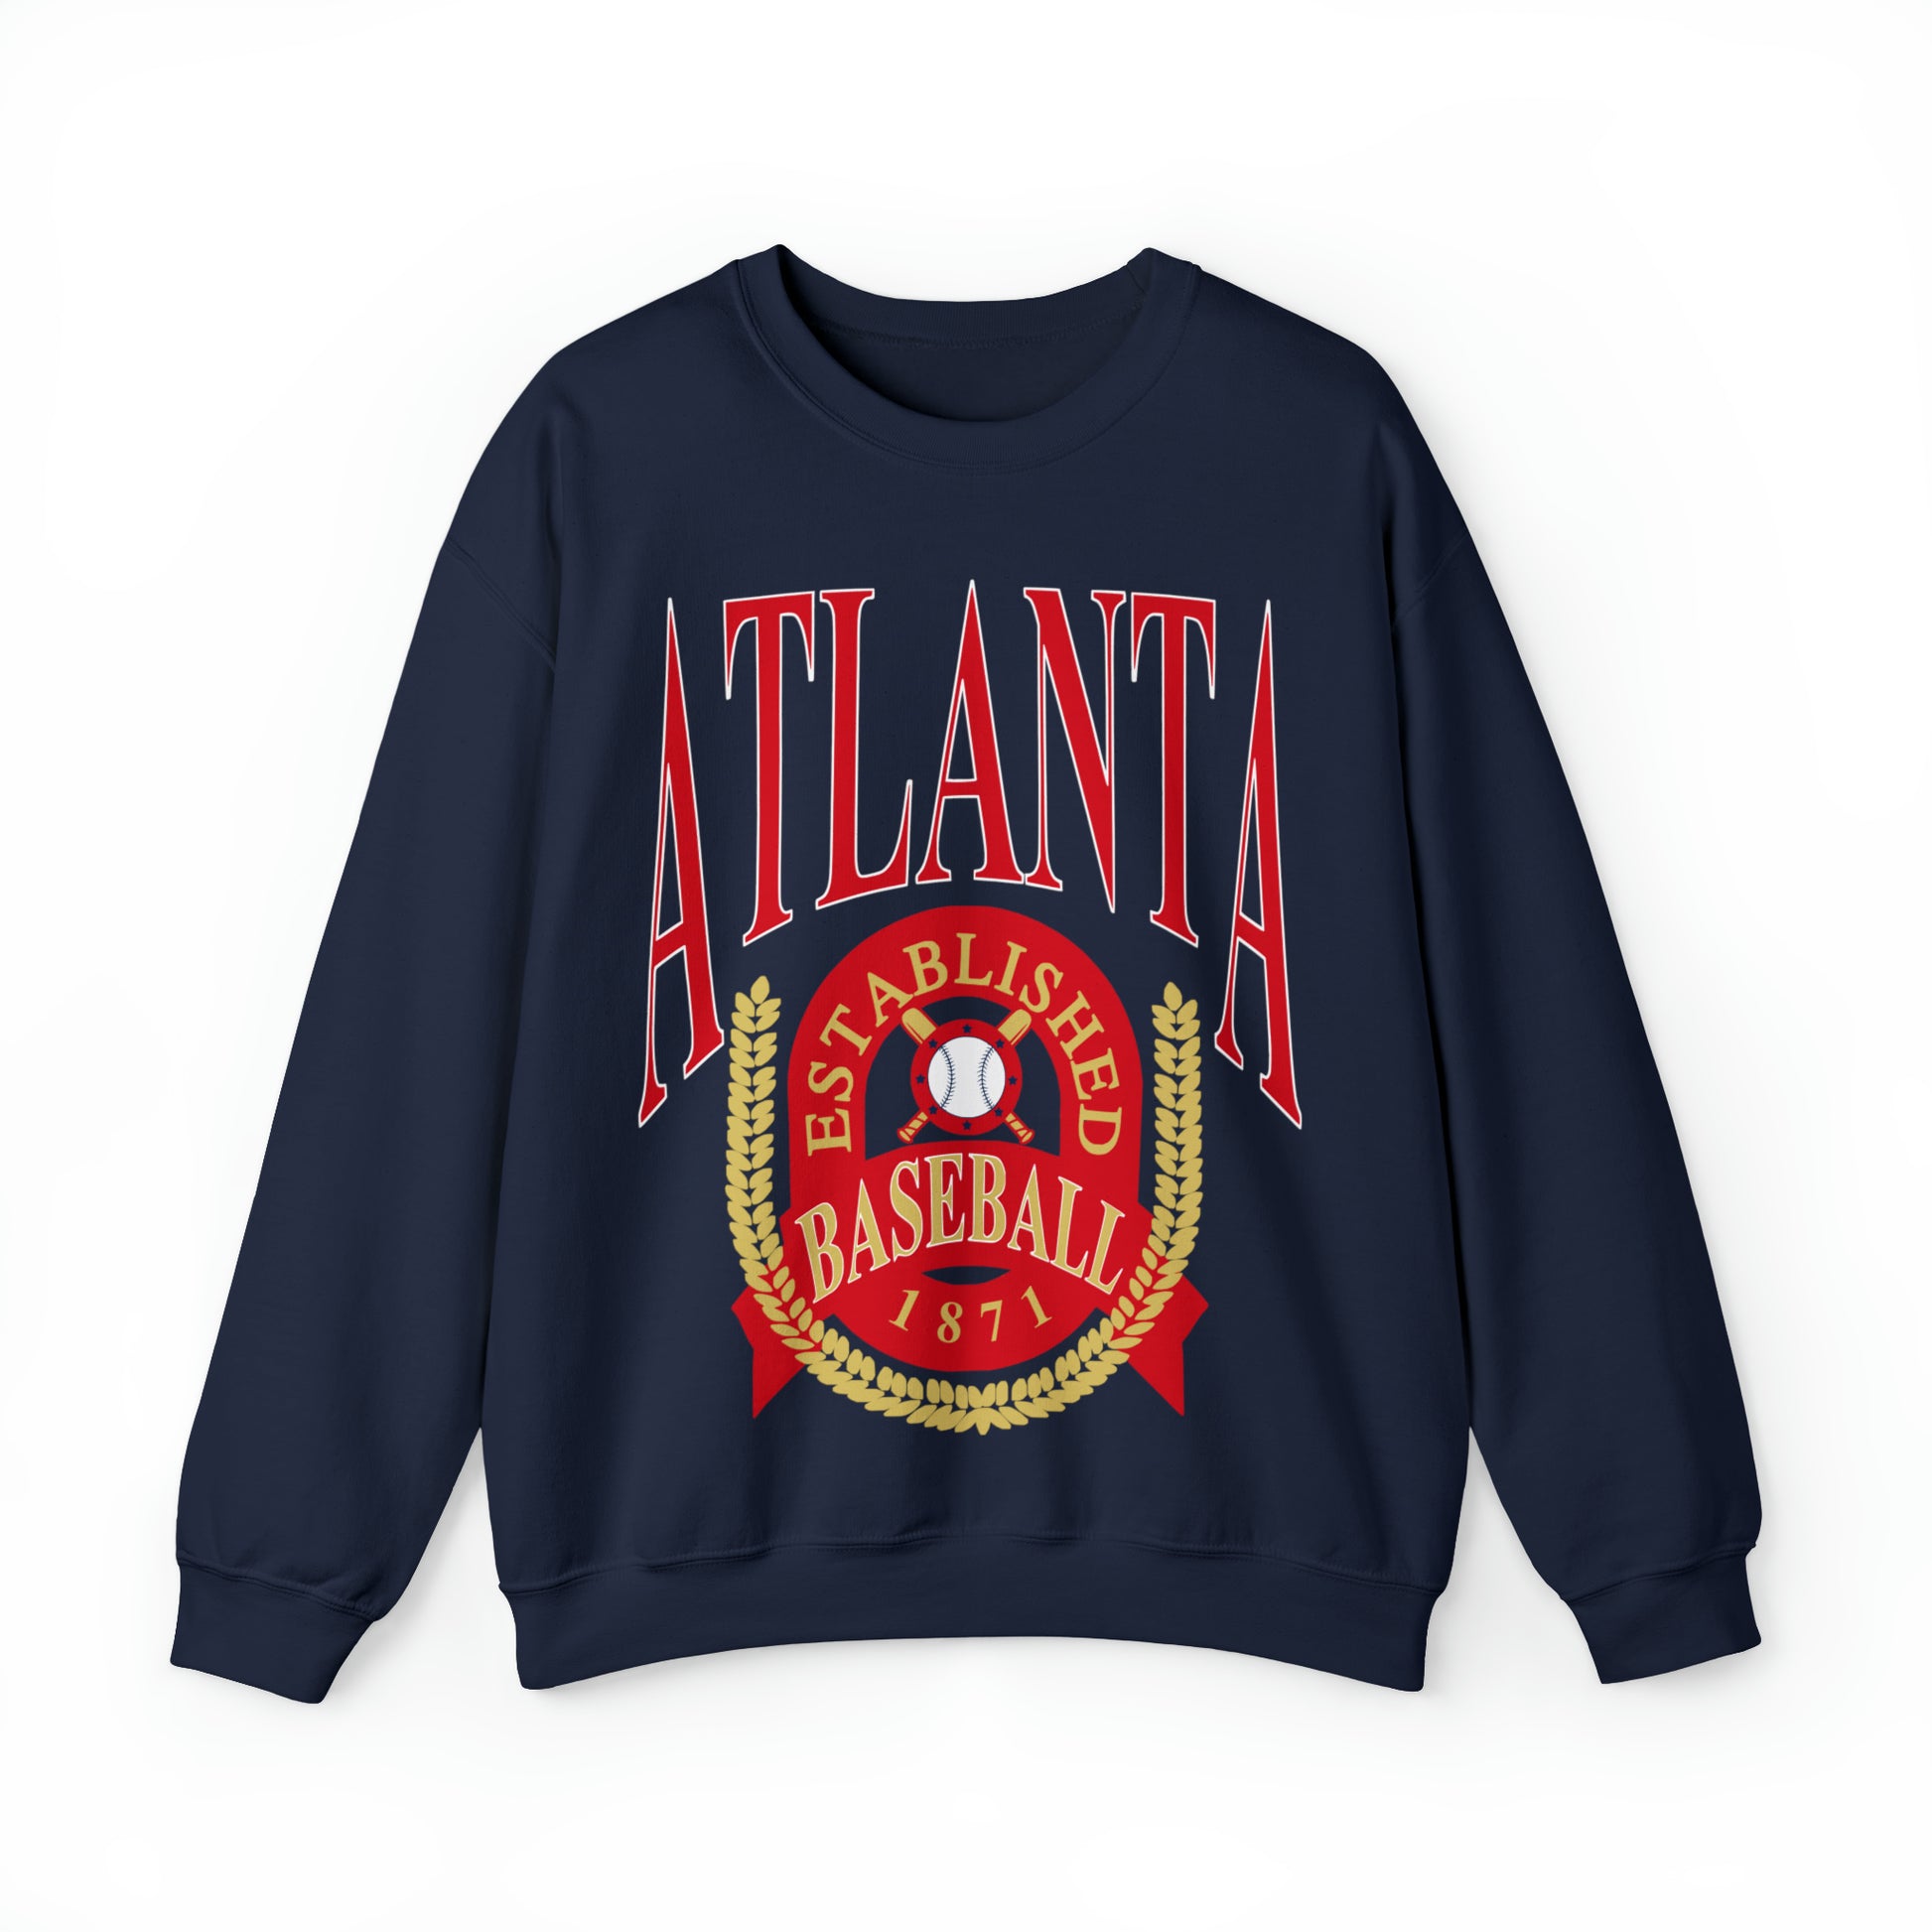 The Dallas Family  Throwback Atlanta Baseball Sweatshirt - Vintage Style  Unisex Crewneck – The Dallas Family Apparel Company